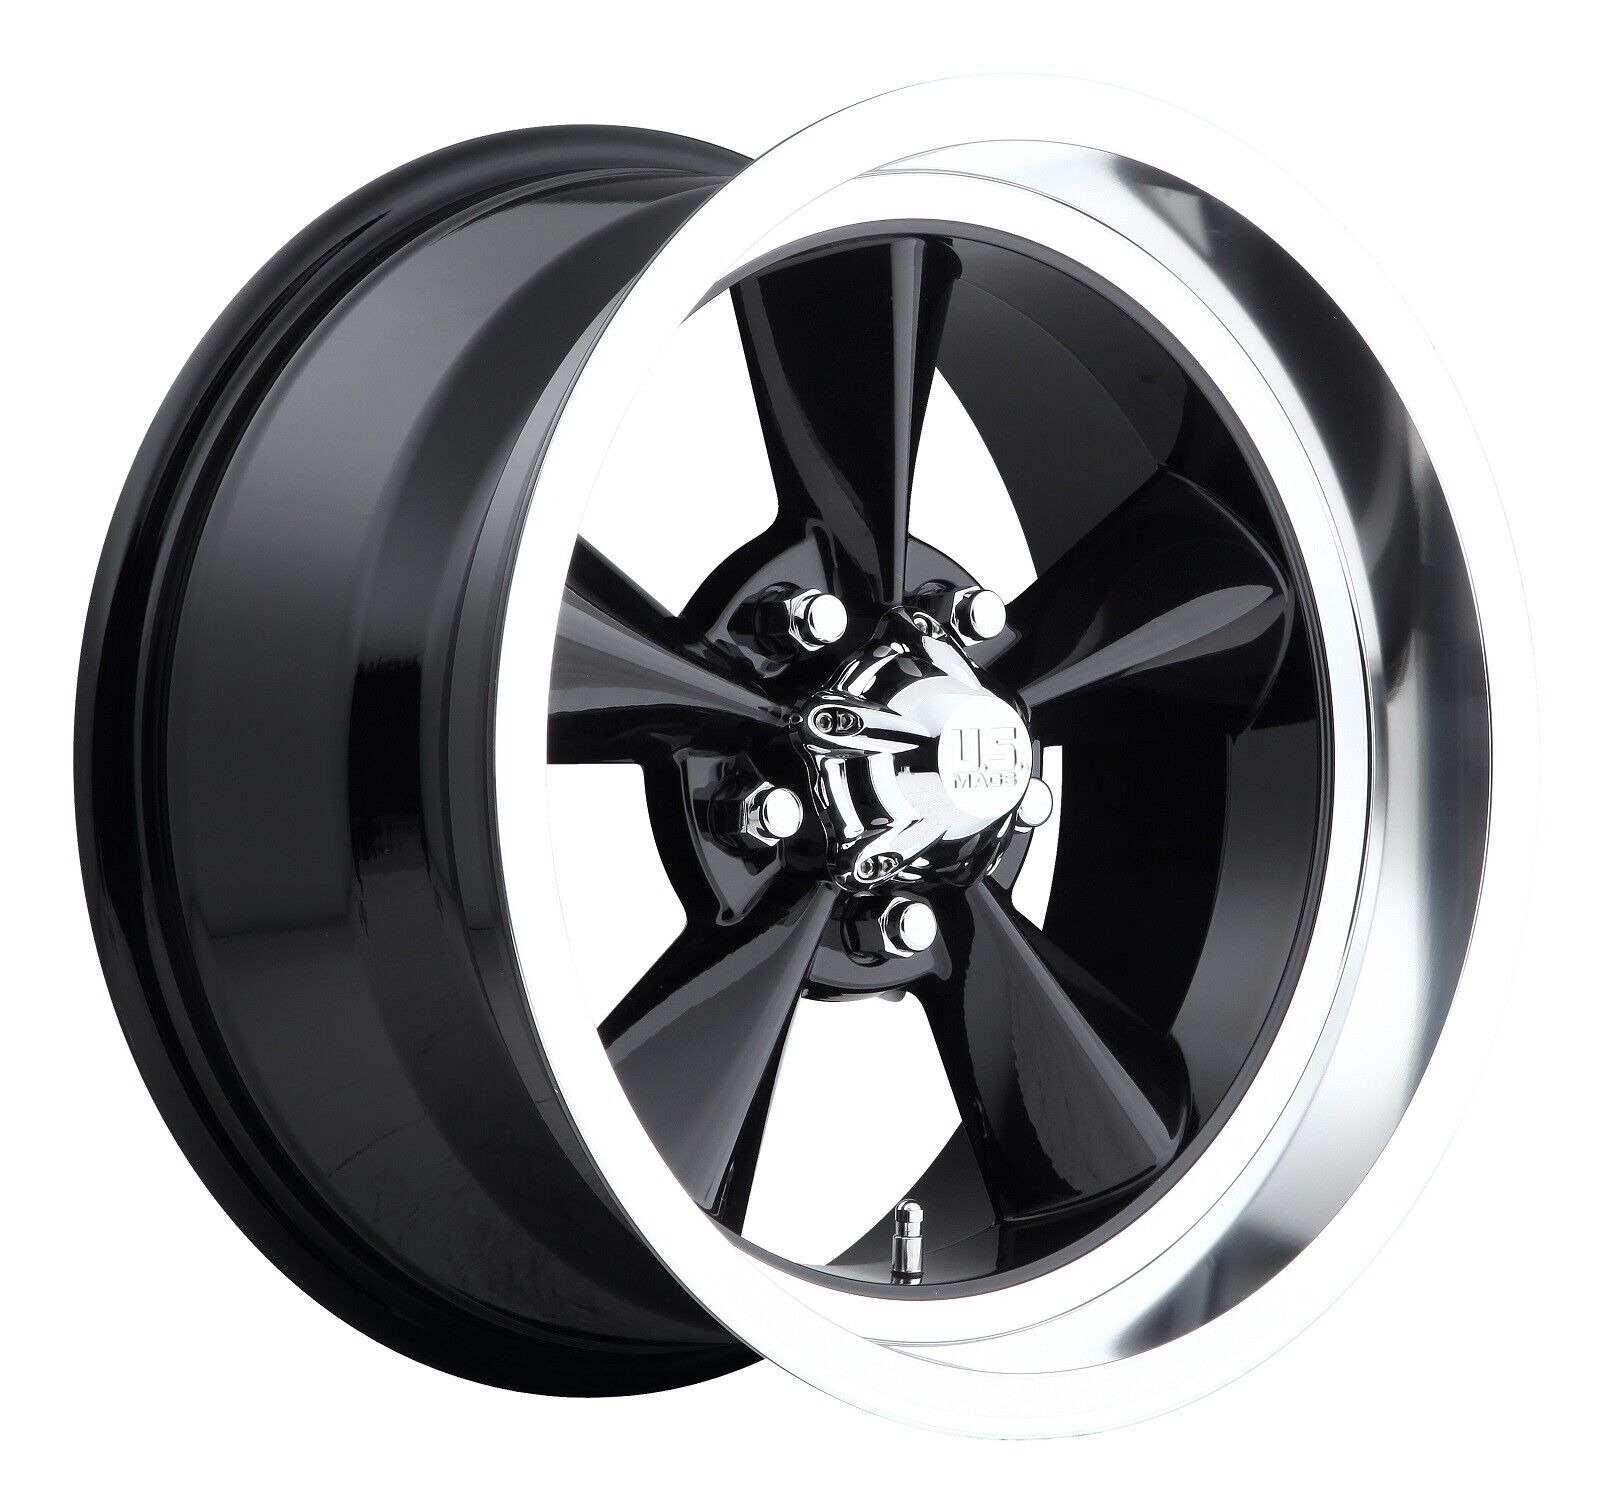 CPP US Mags U107 Standard wheels 15x8 fits: DODGE CHALLENGER SUPER BEE